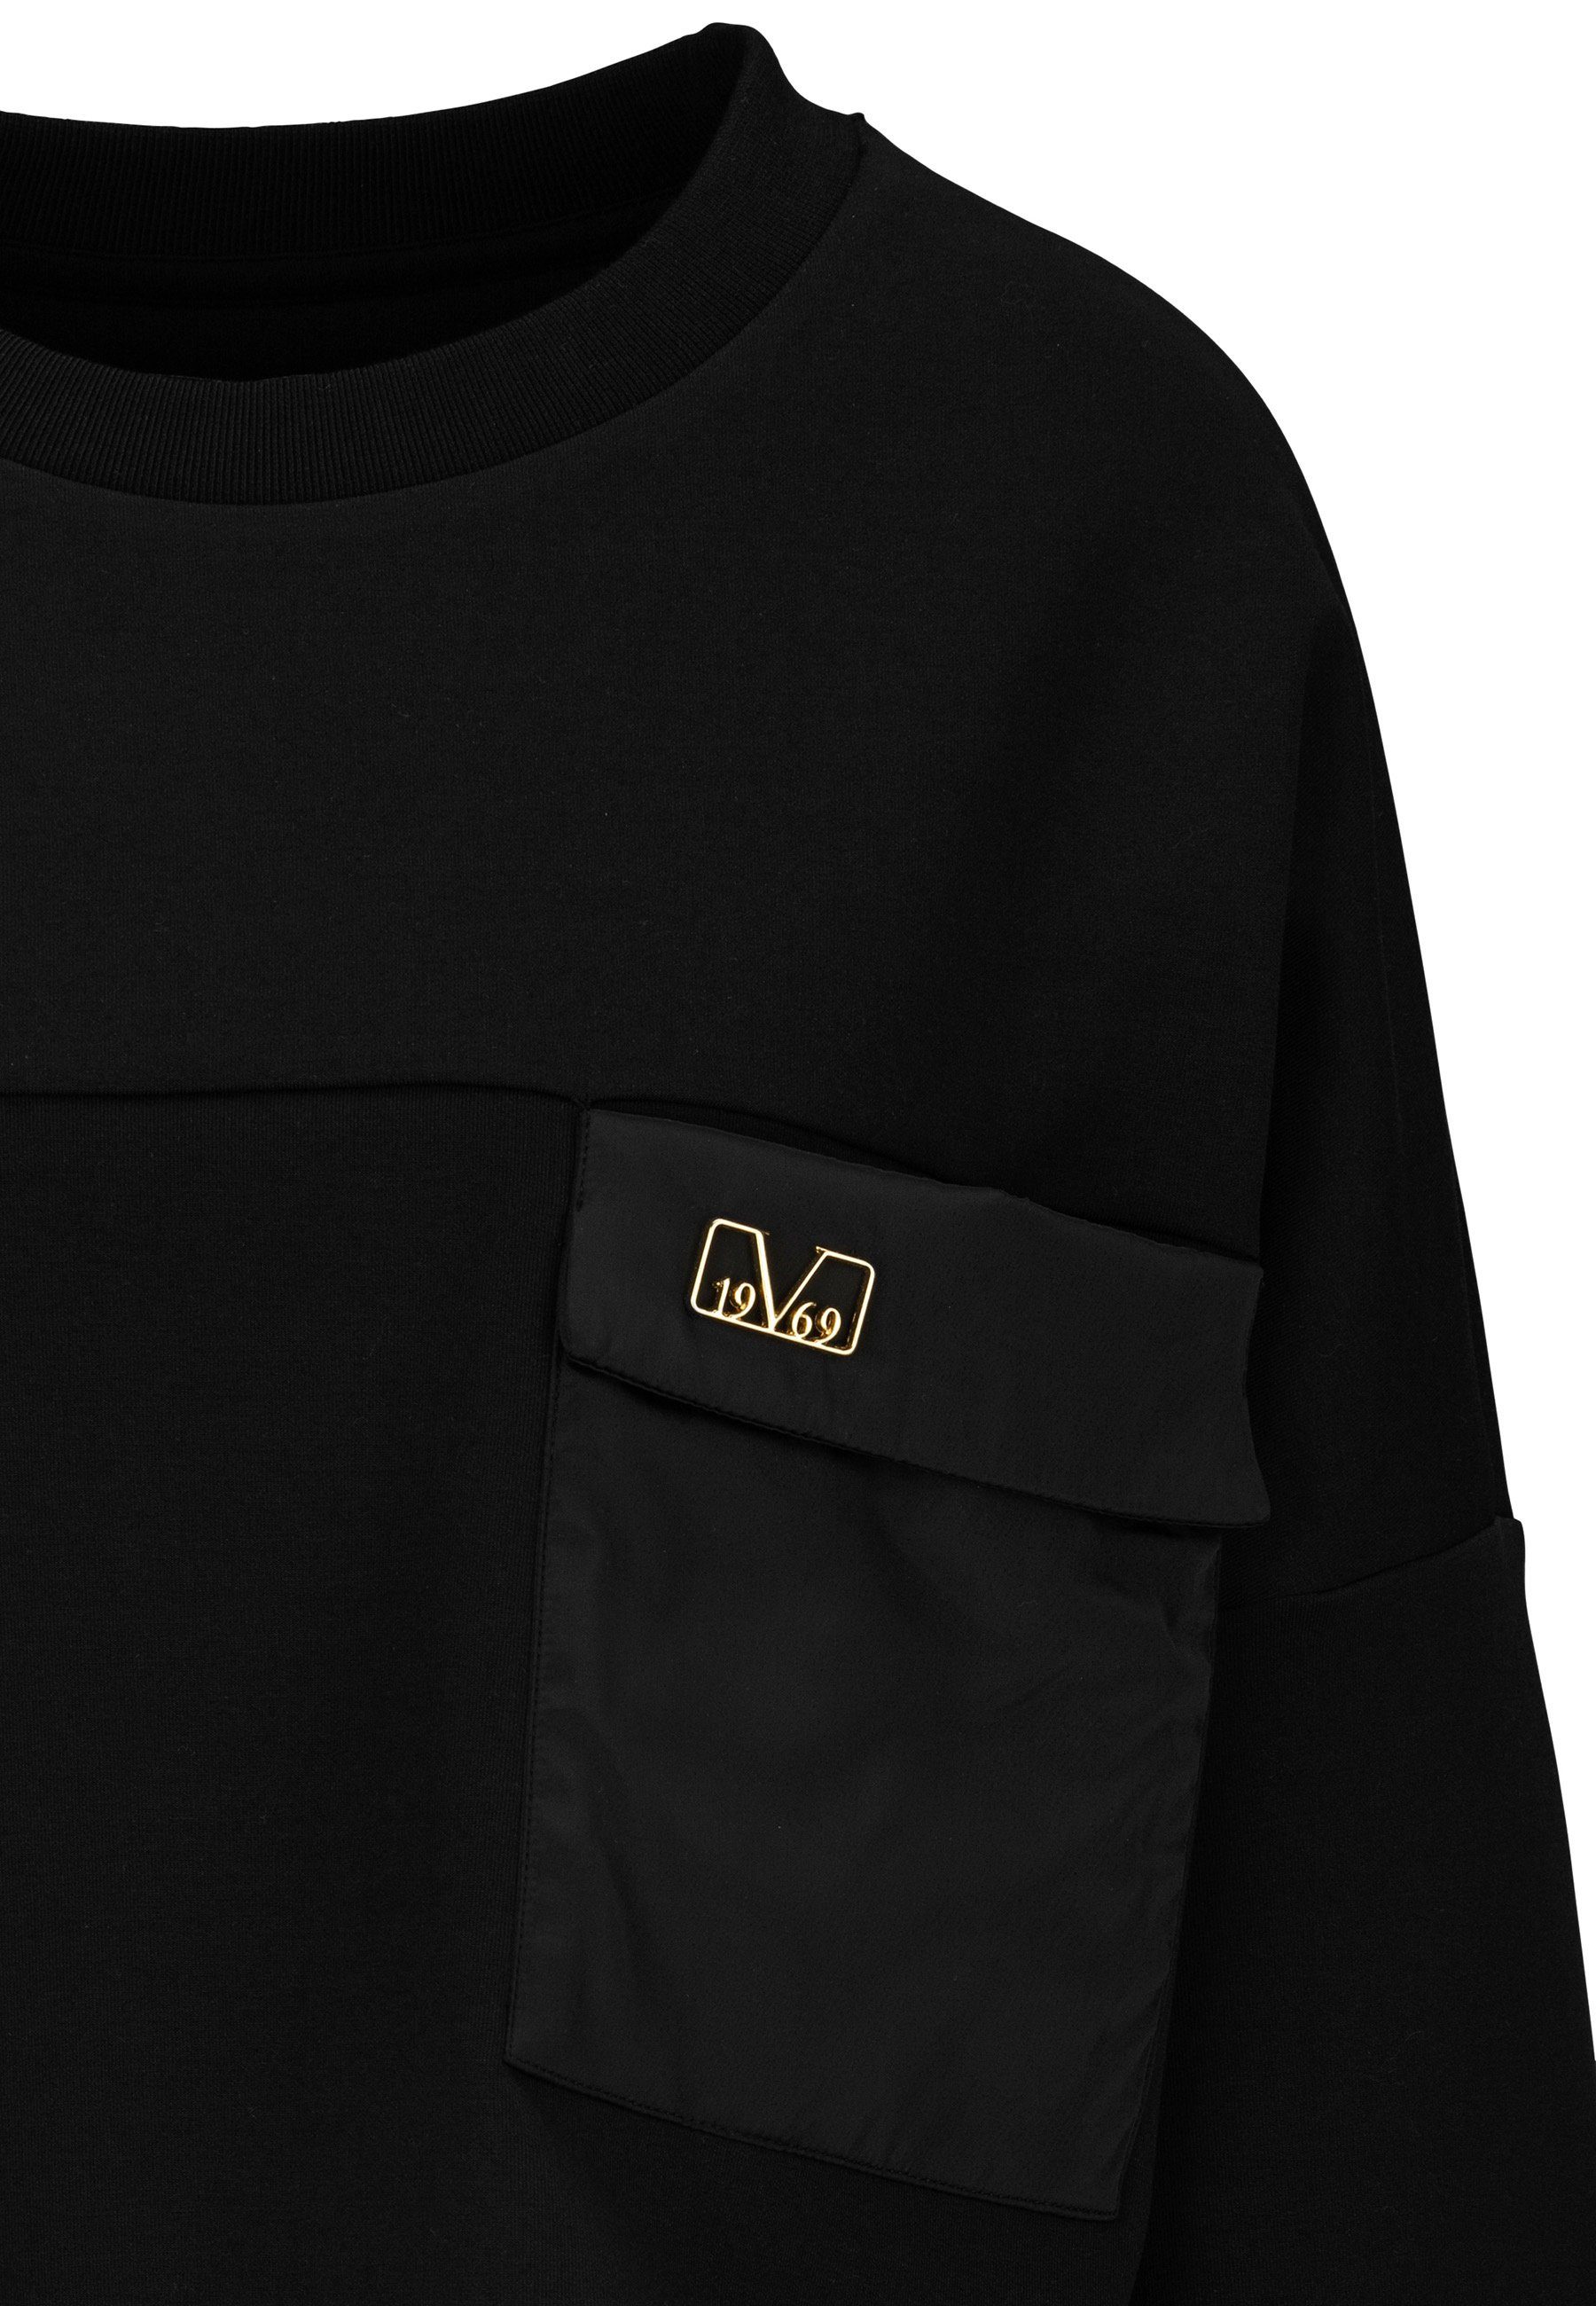 ITALIA Pullover Tasche Italia by Sweatshirt Sweatshirt Versace 19V69 mit